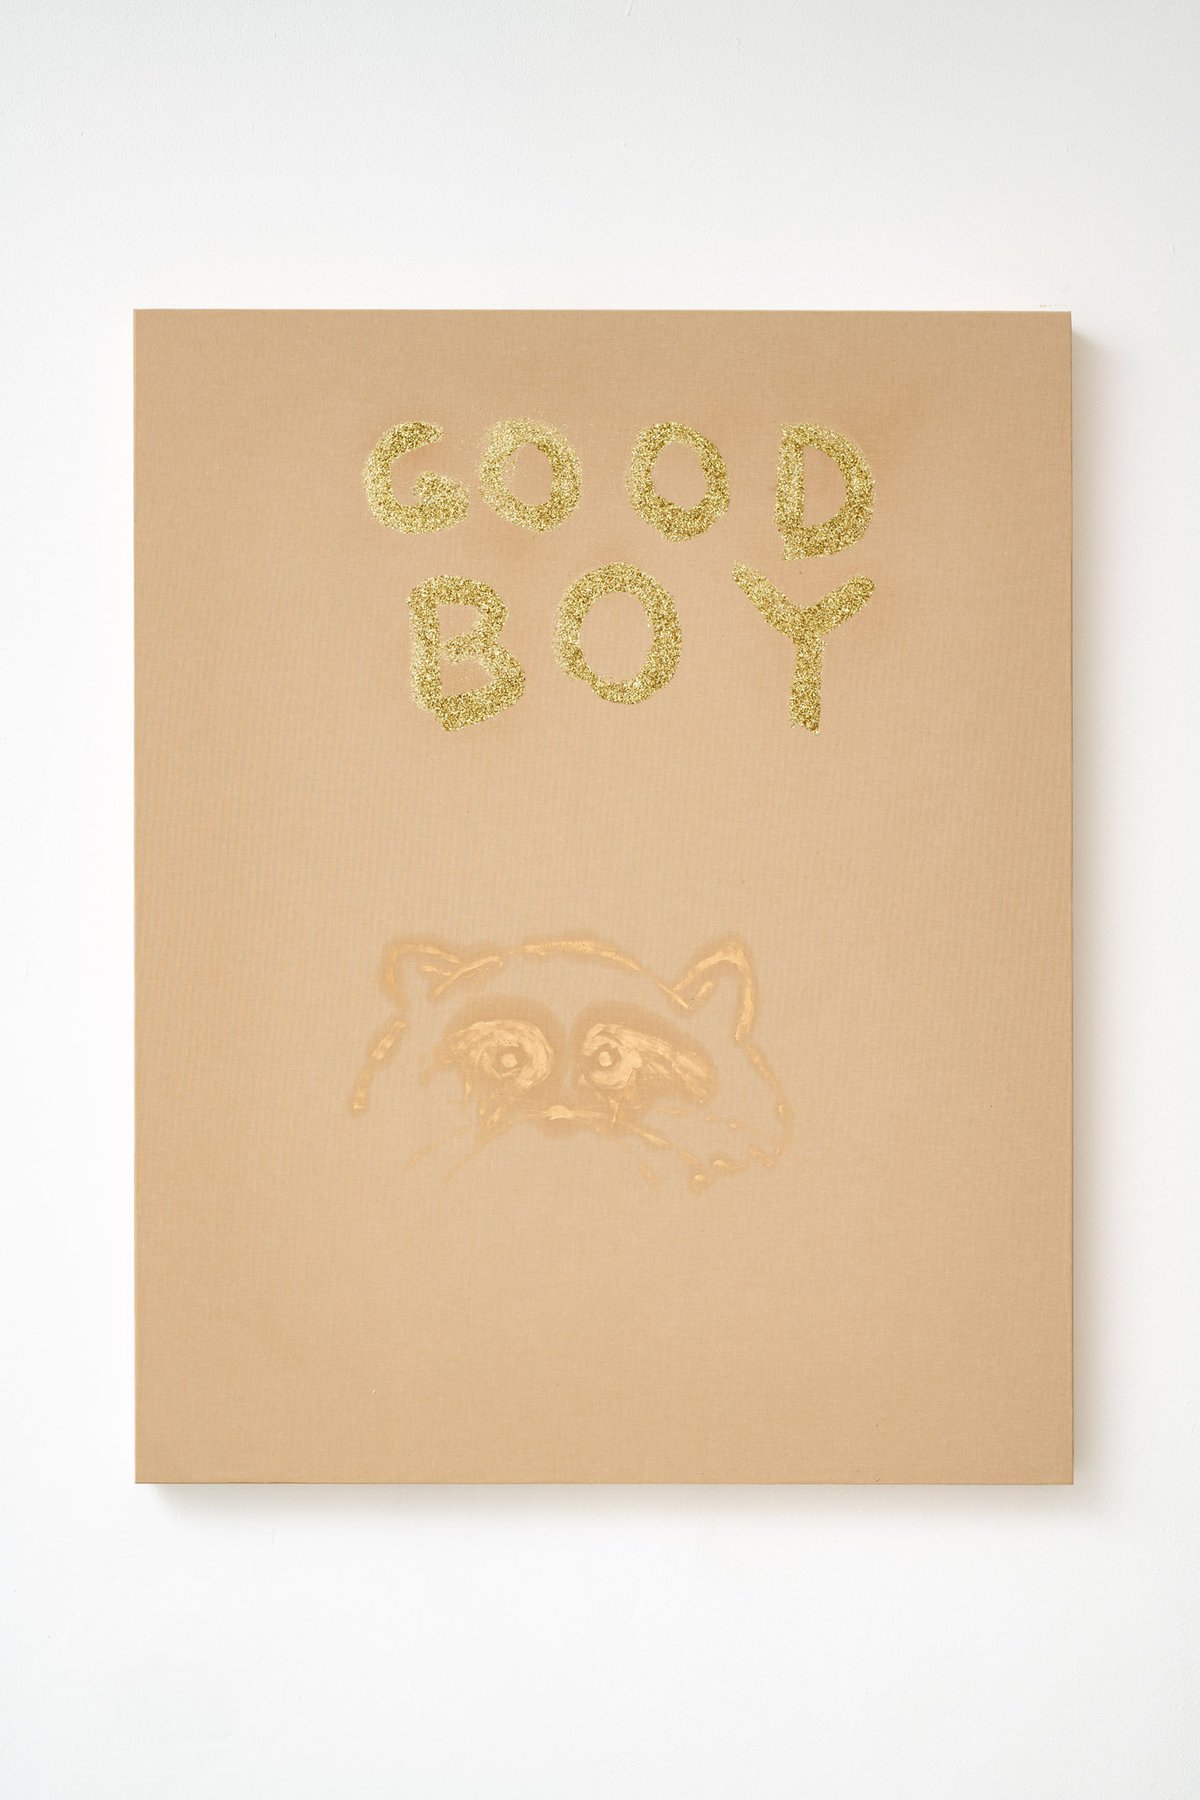 Philipp TimischlGOOD BOY (Brown, Naples, Yellow, Gold), 2019Canvas on wooden board, oil, glitter100 x 70 x 5 cm